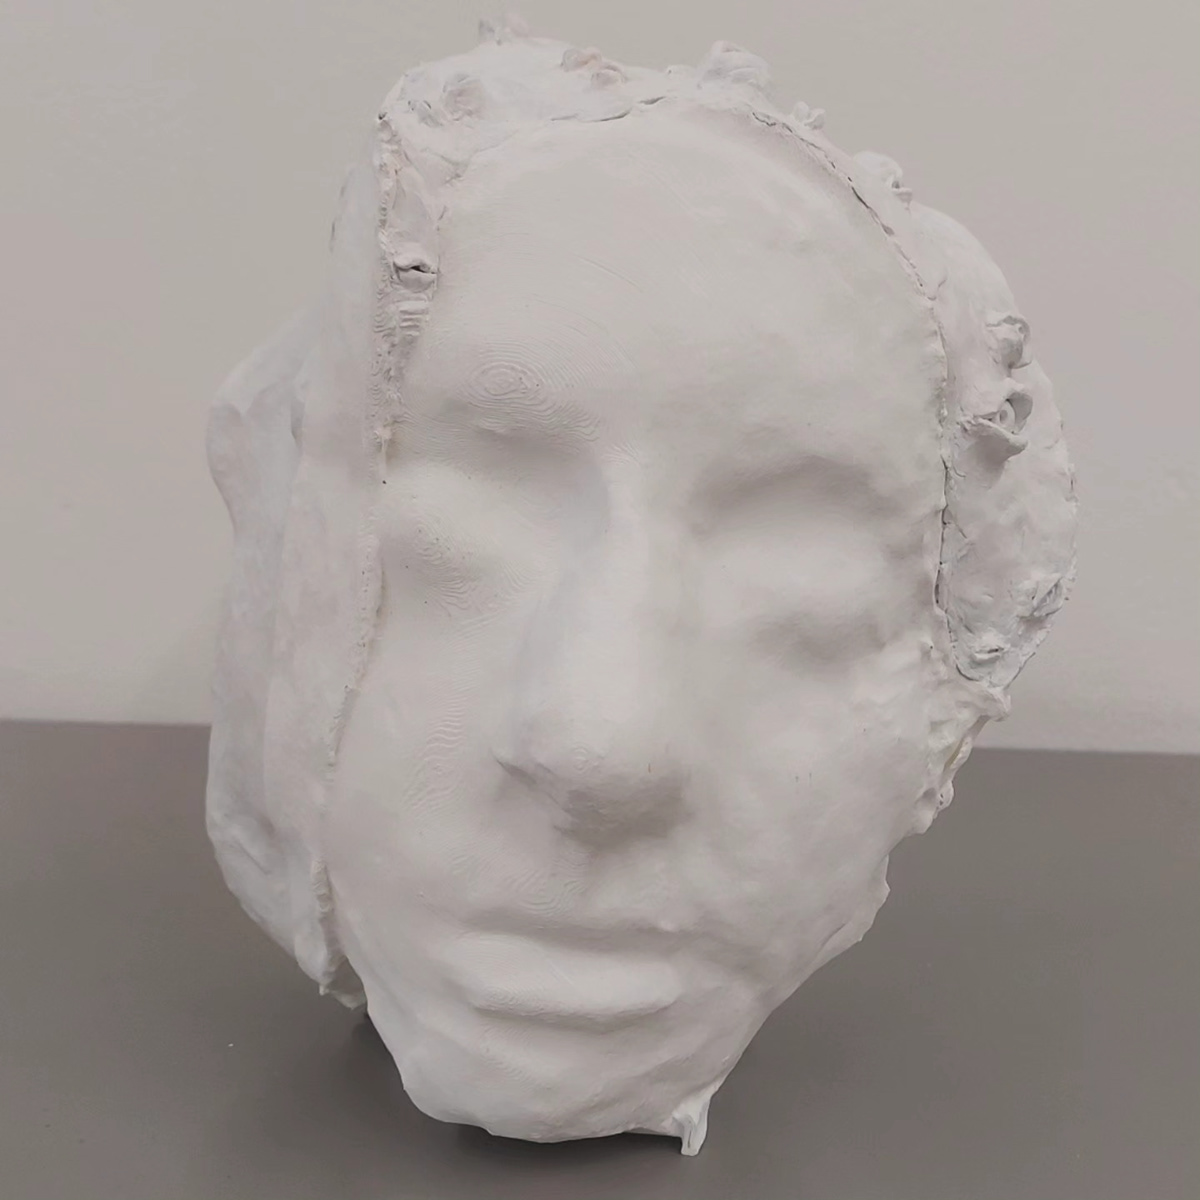 sculpture selfportrait 3D 3dprinted eyes art ILLUSTRATION  design visual identity